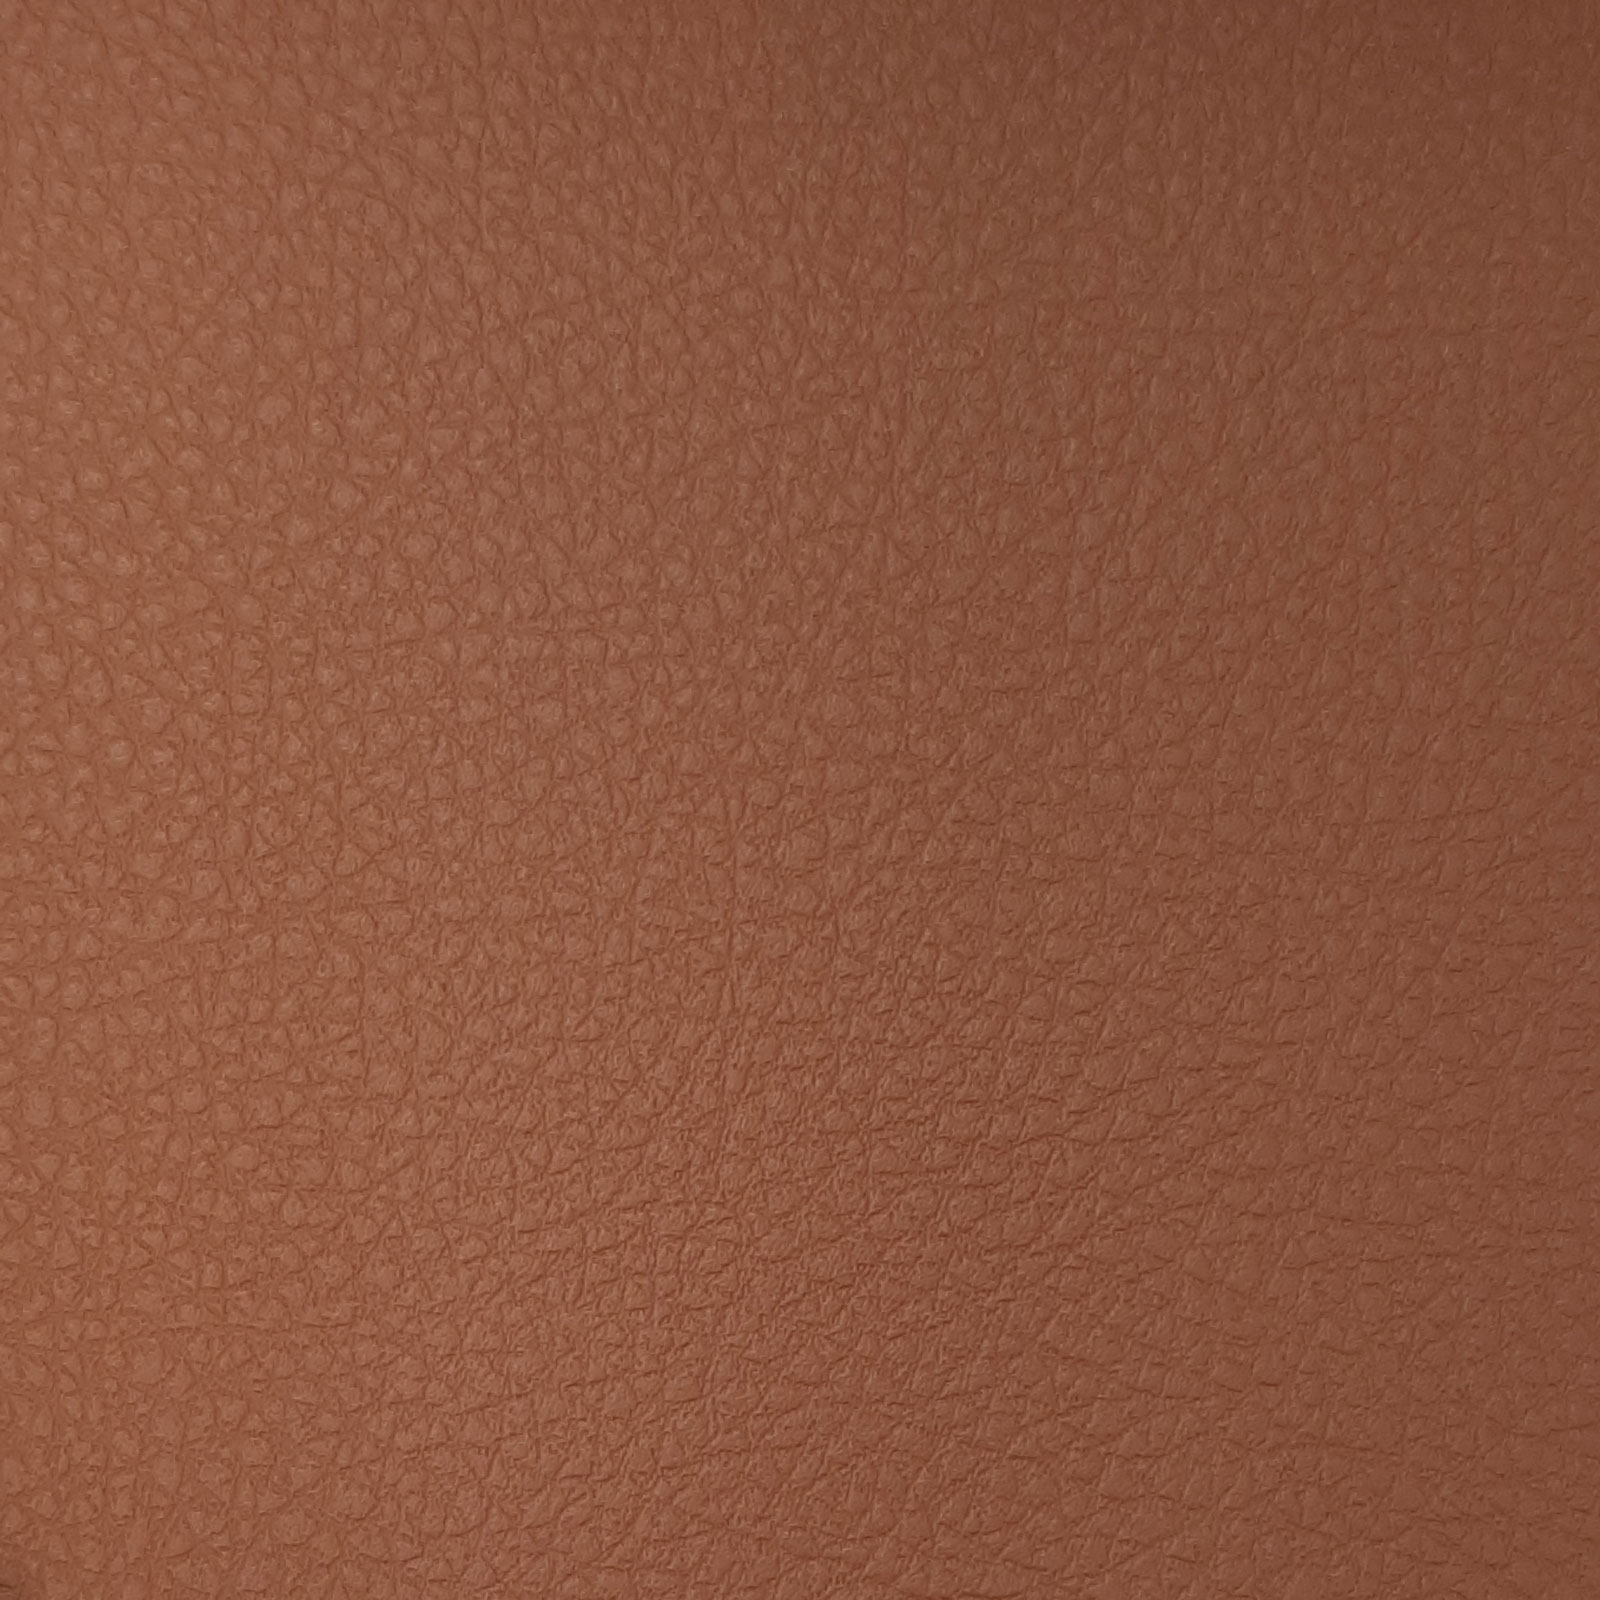 Skytex imitation leather flame retardant B1 - light-brown